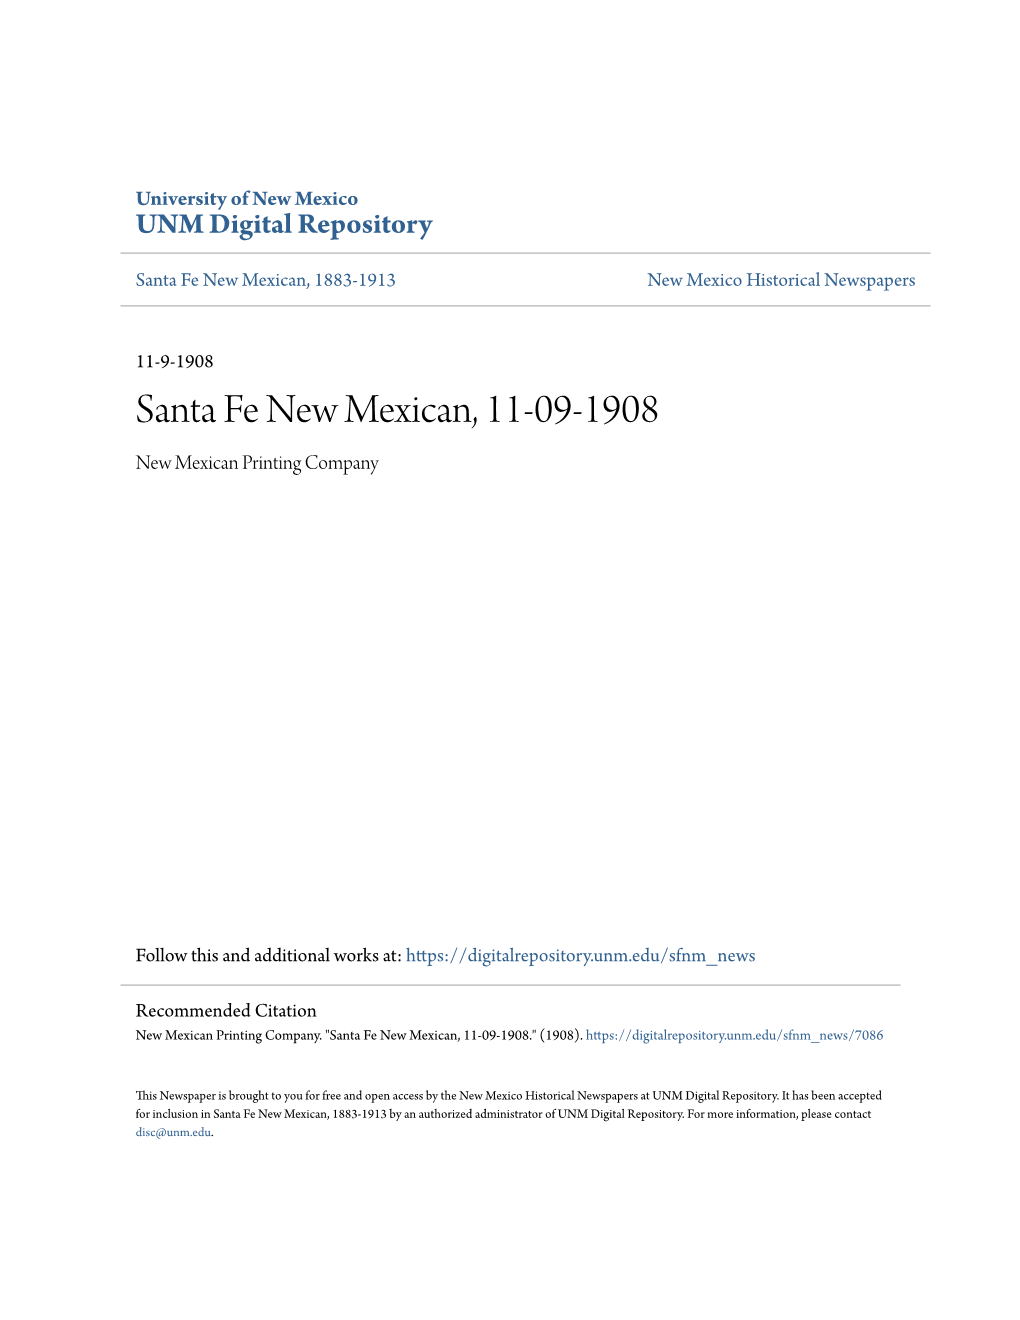 Santa Fe New Mexican, 11-09-1908 New Mexican Printing Company